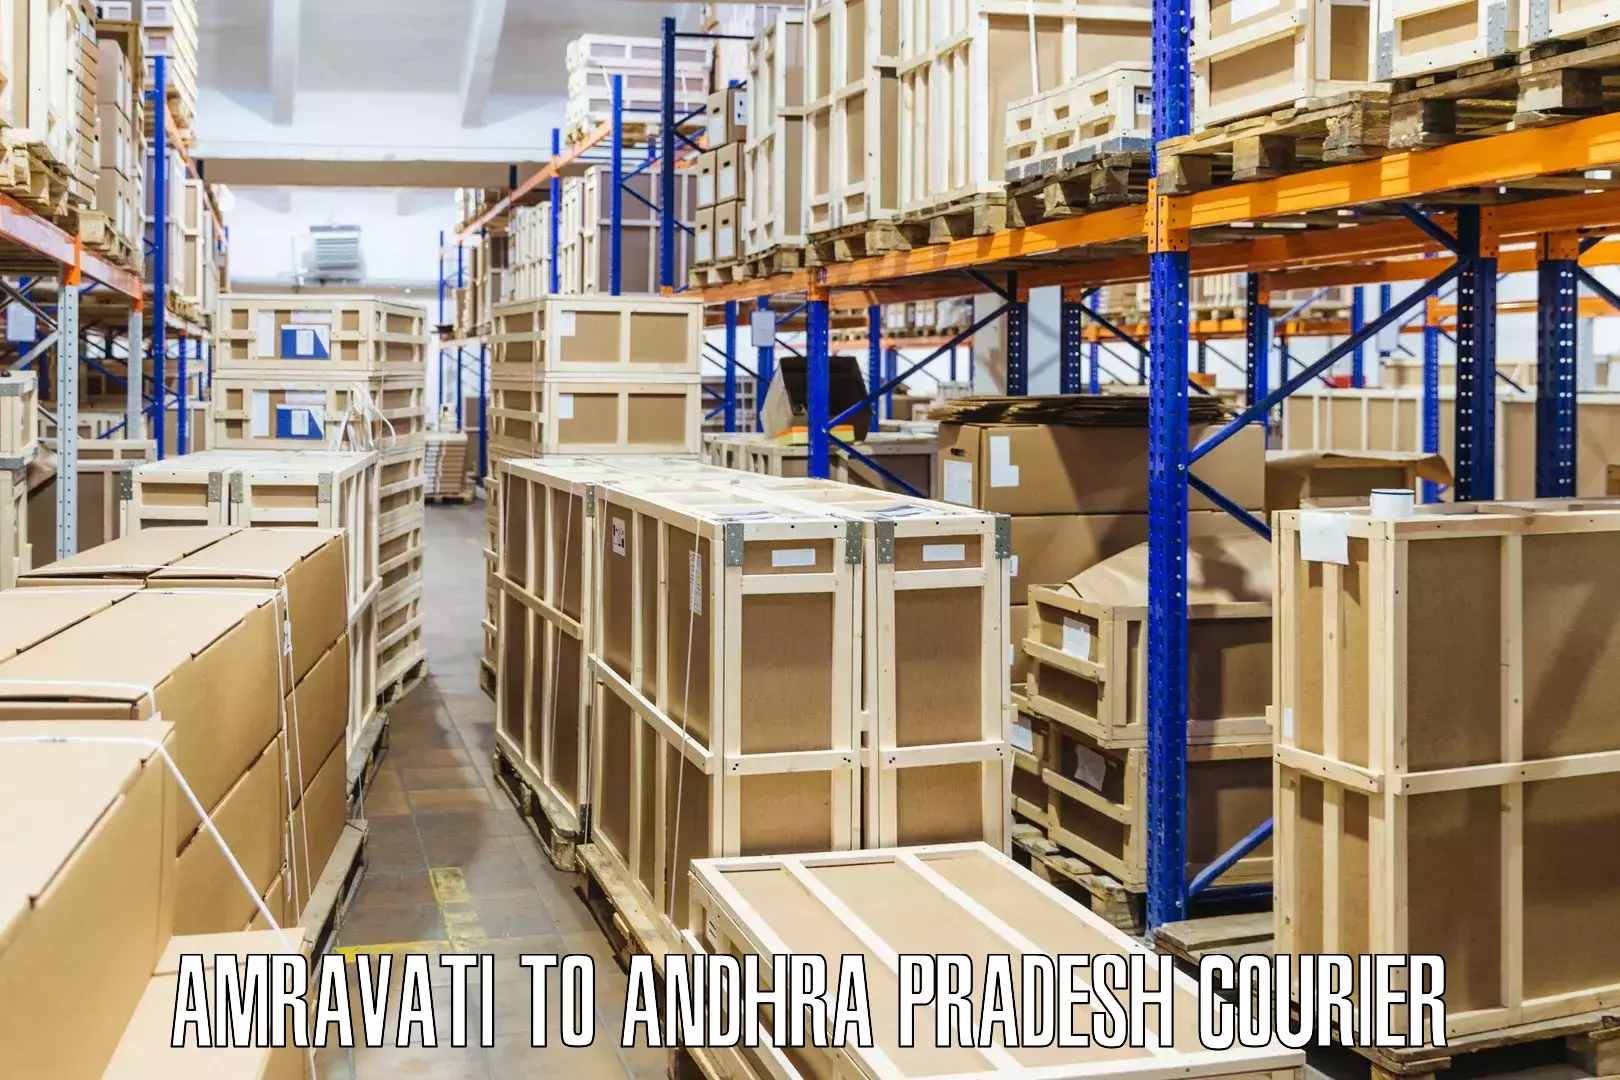 Nationwide delivery network Amravati to Andhra Pradesh